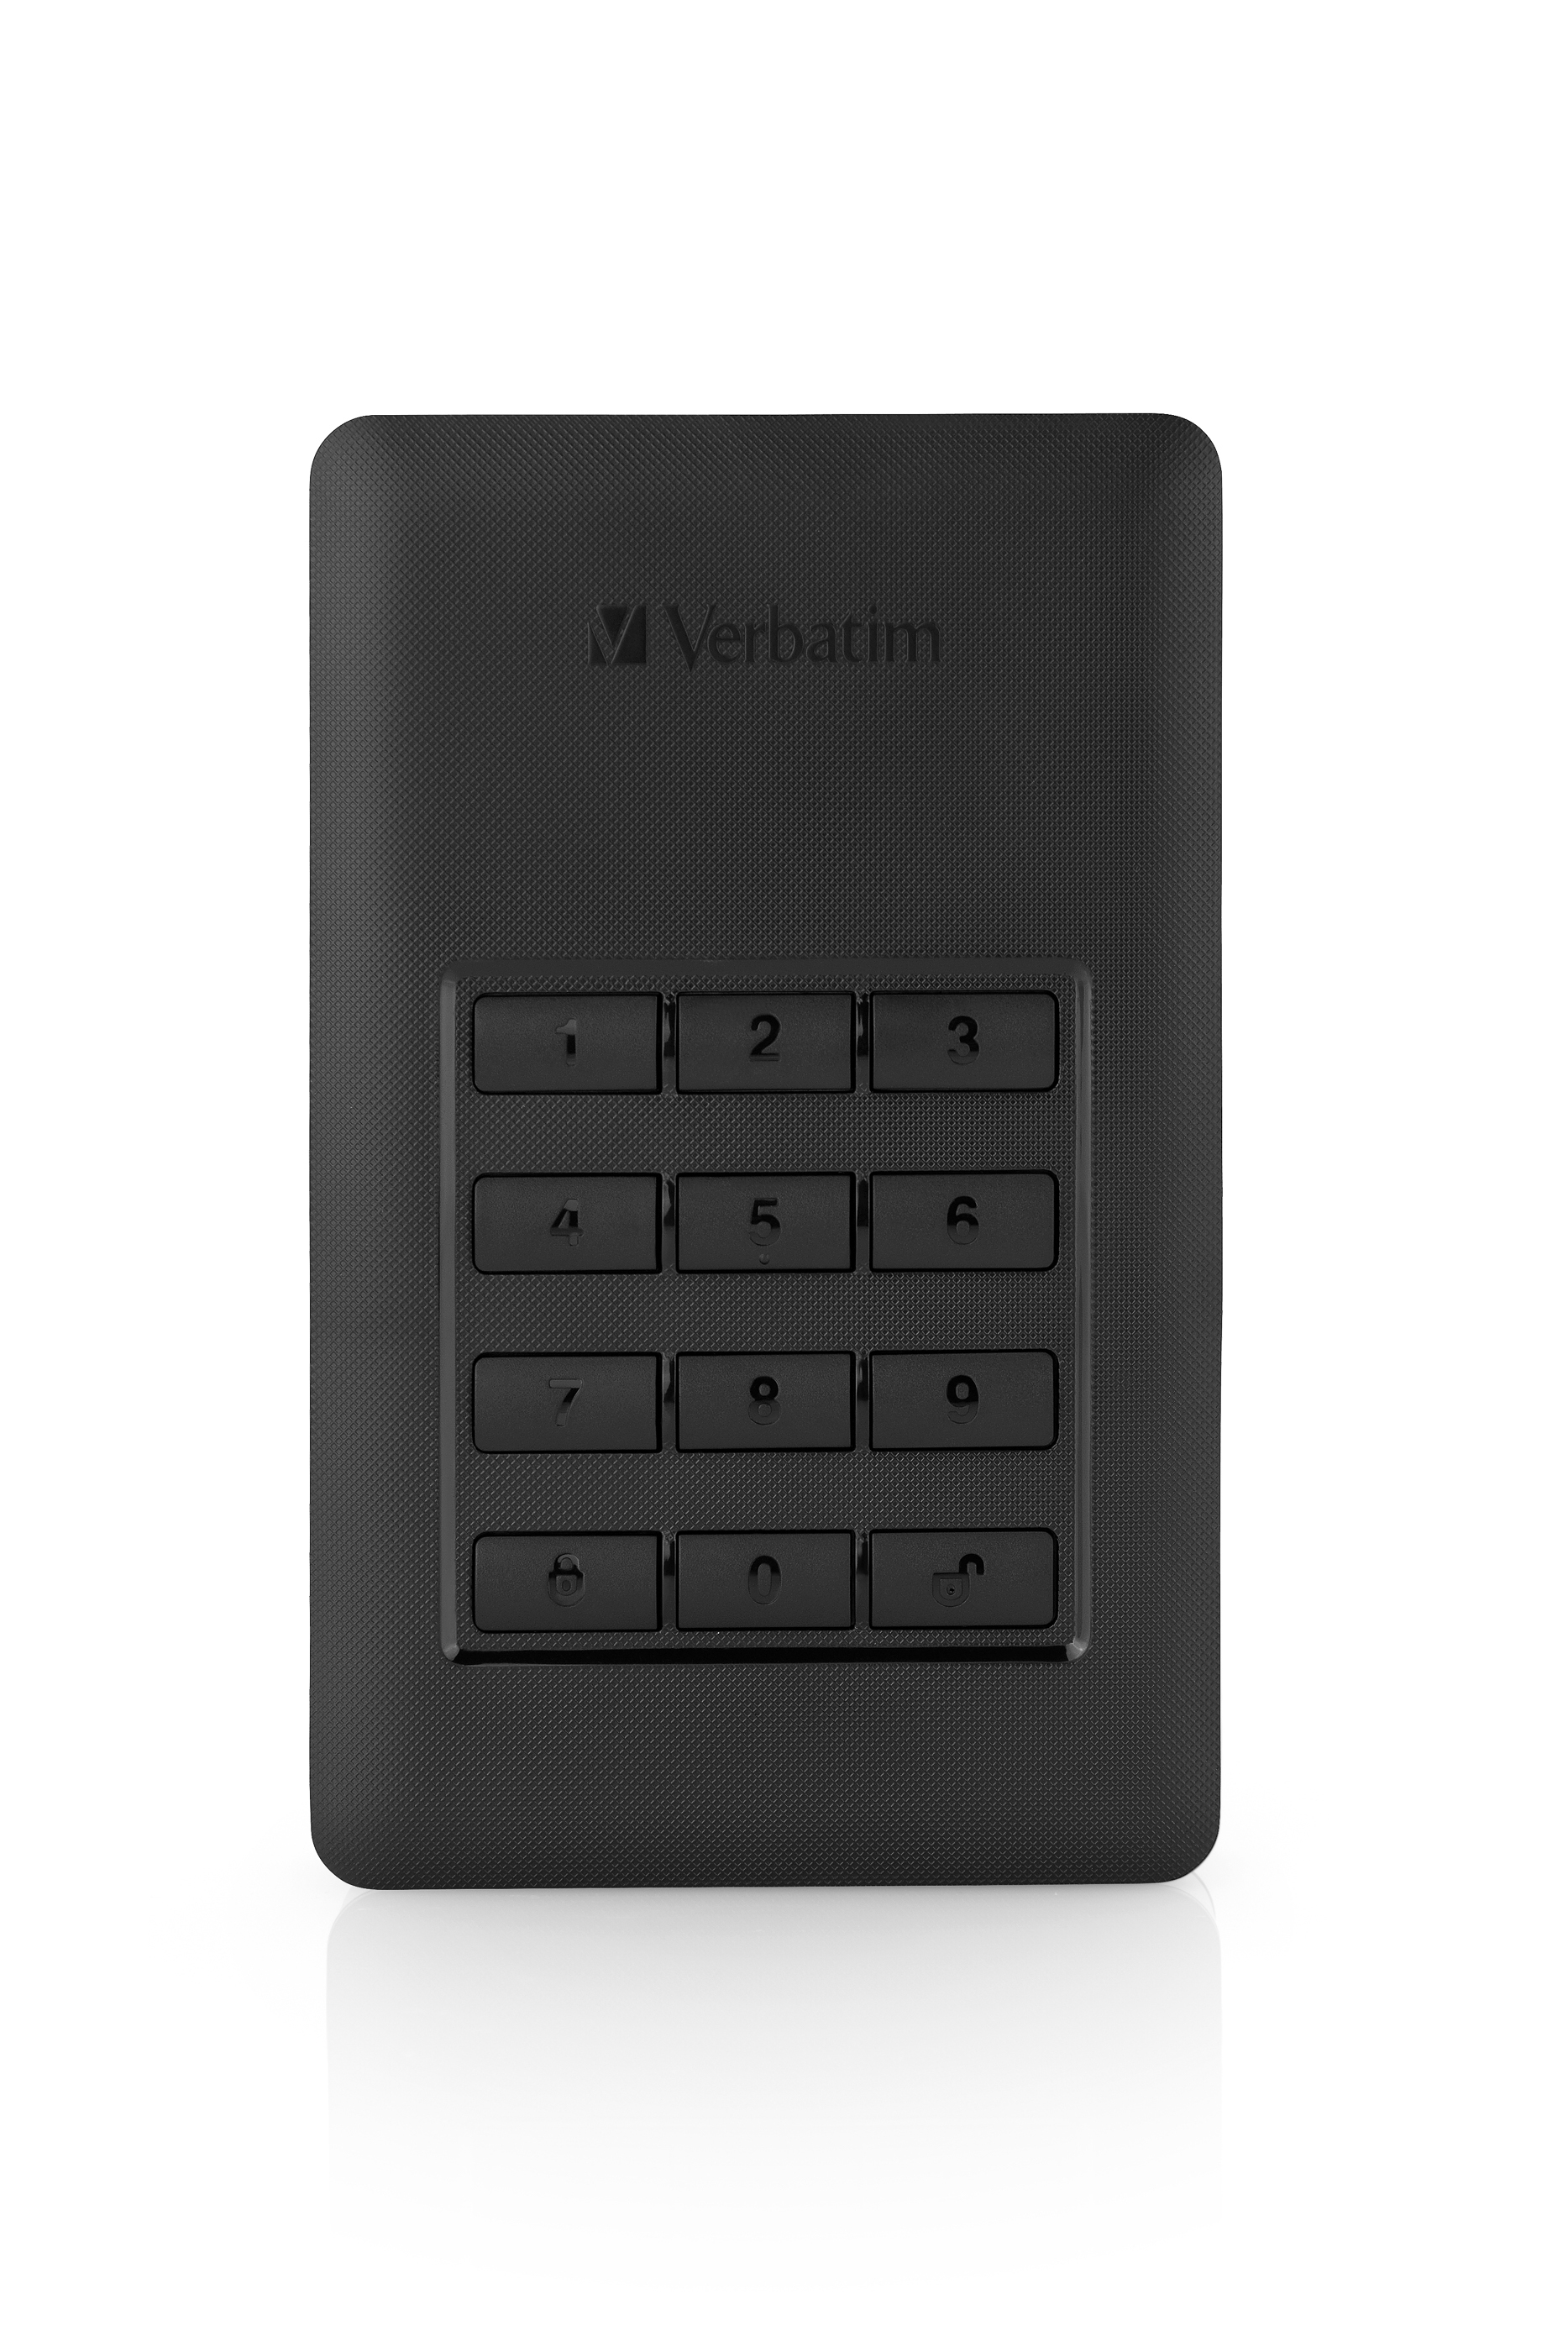 Verbatim Store 'n' Go Portable - Festplatte - verschlüsselt - 1 TB - extern (tragbar)